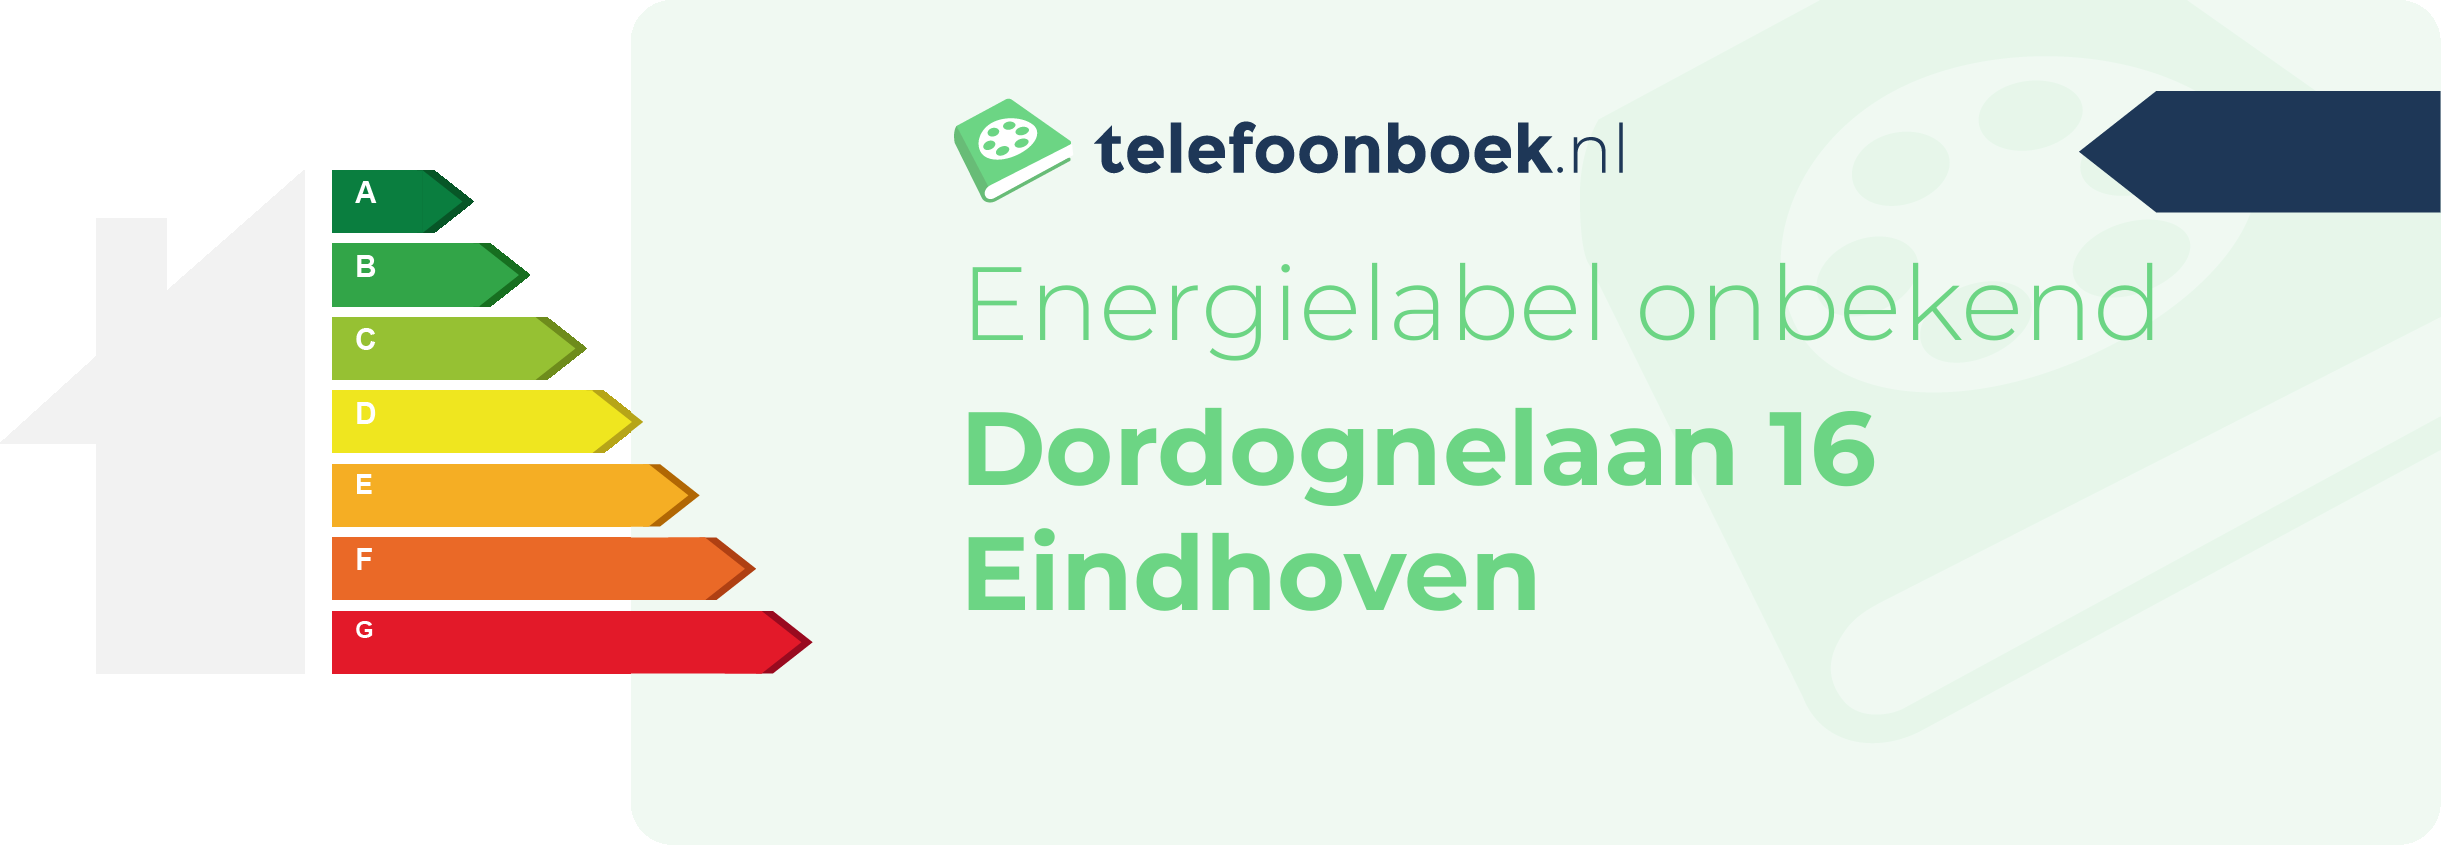 Energielabel Dordognelaan 16 Eindhoven